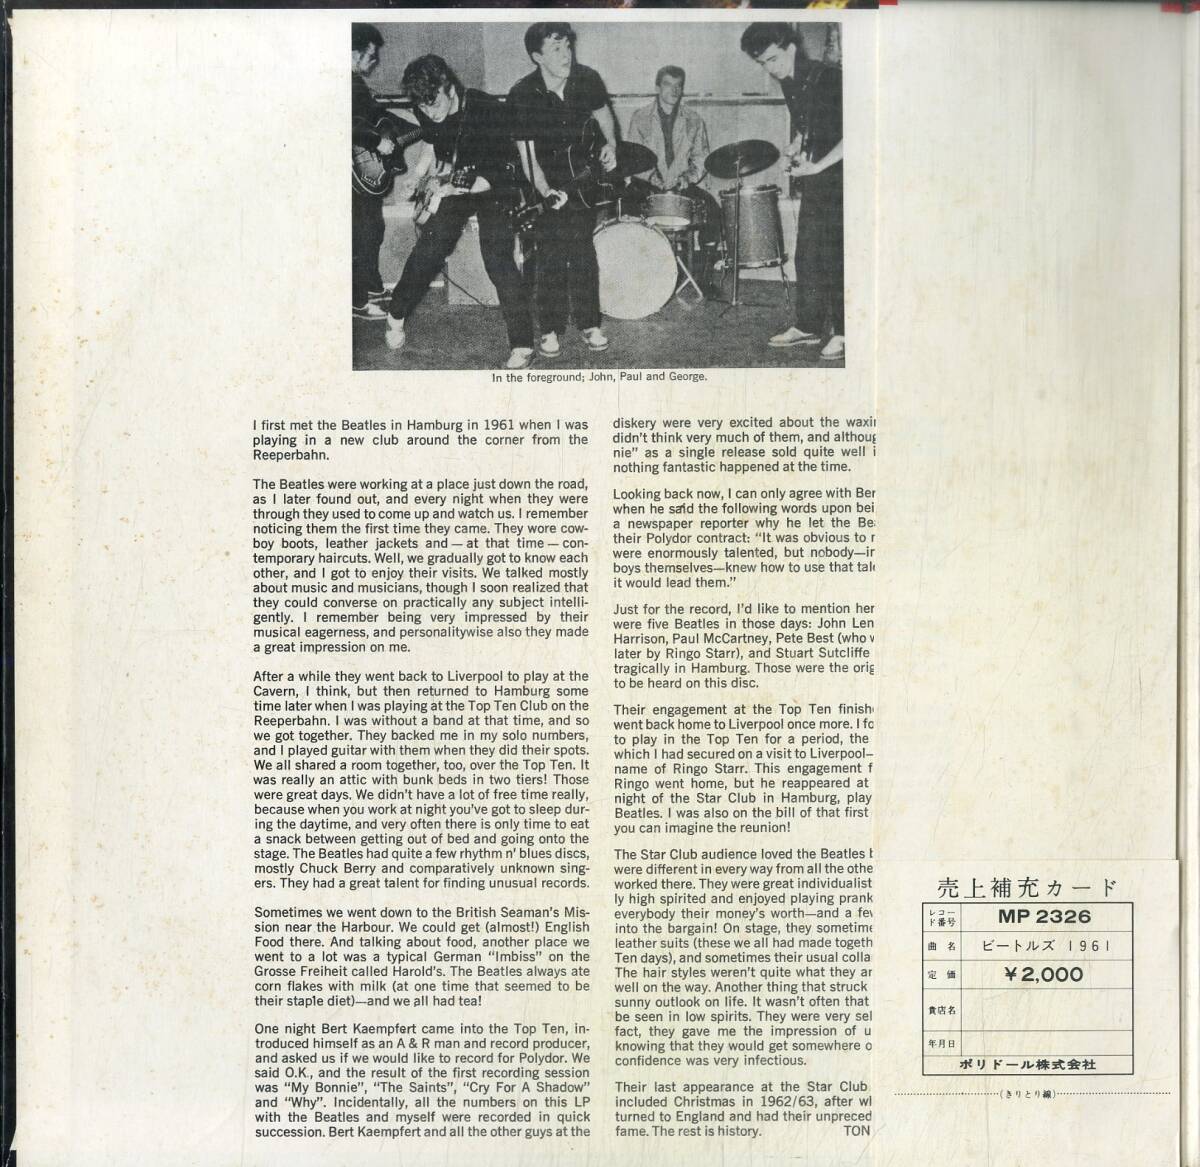 A00589132/LP/ビートルズ feat. トニー・シェリダン「In The Beginning / The Beatles 1961 (1973年・MP-2326・ロックンロール)」_画像3